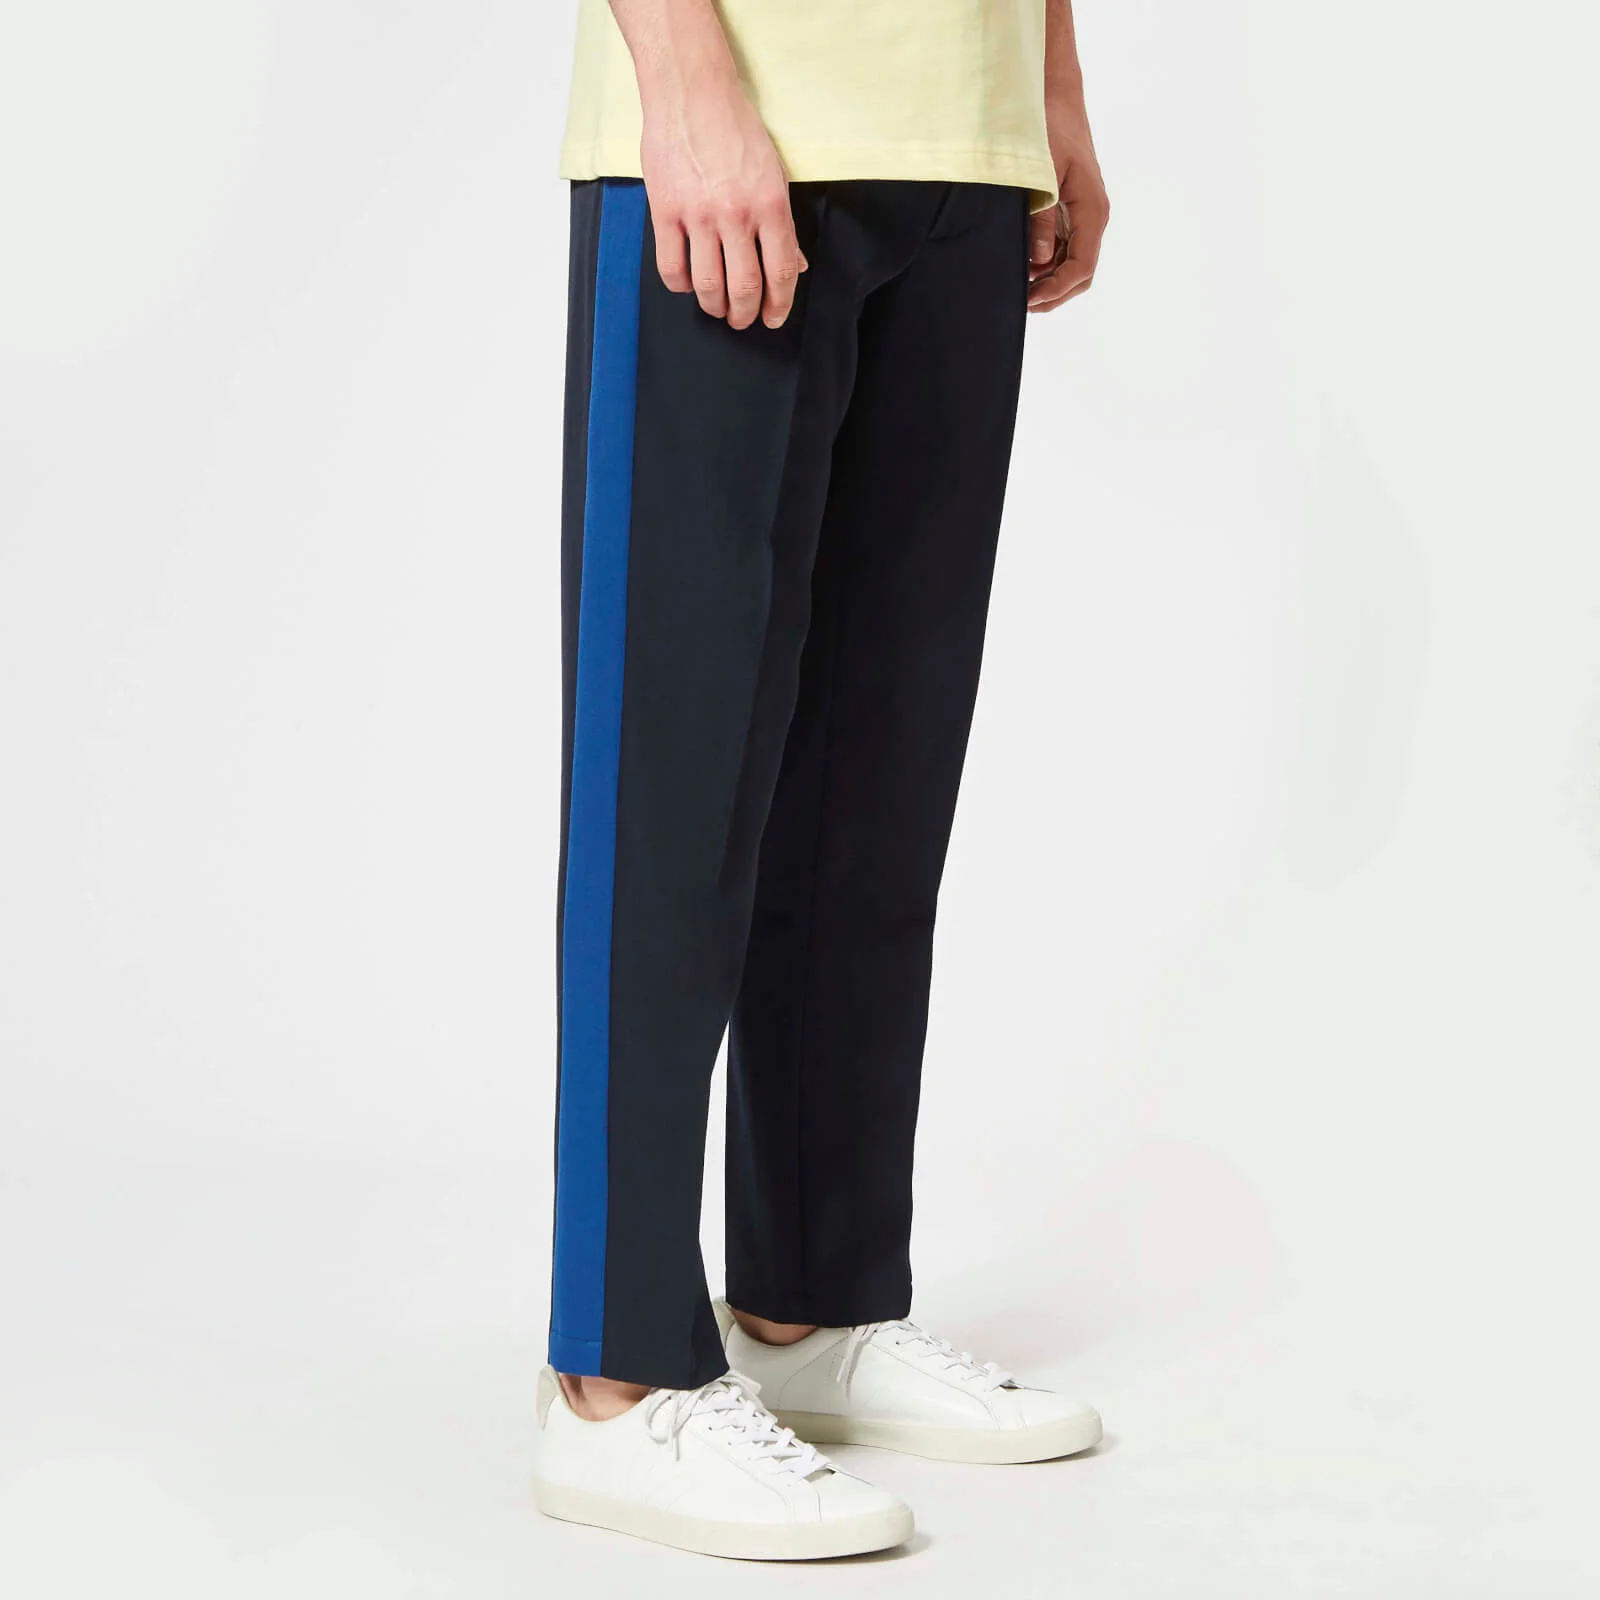 Axel Arigato Men's Slim Fit Side Stripe Trousers - Dark Navy/Blue Image 1